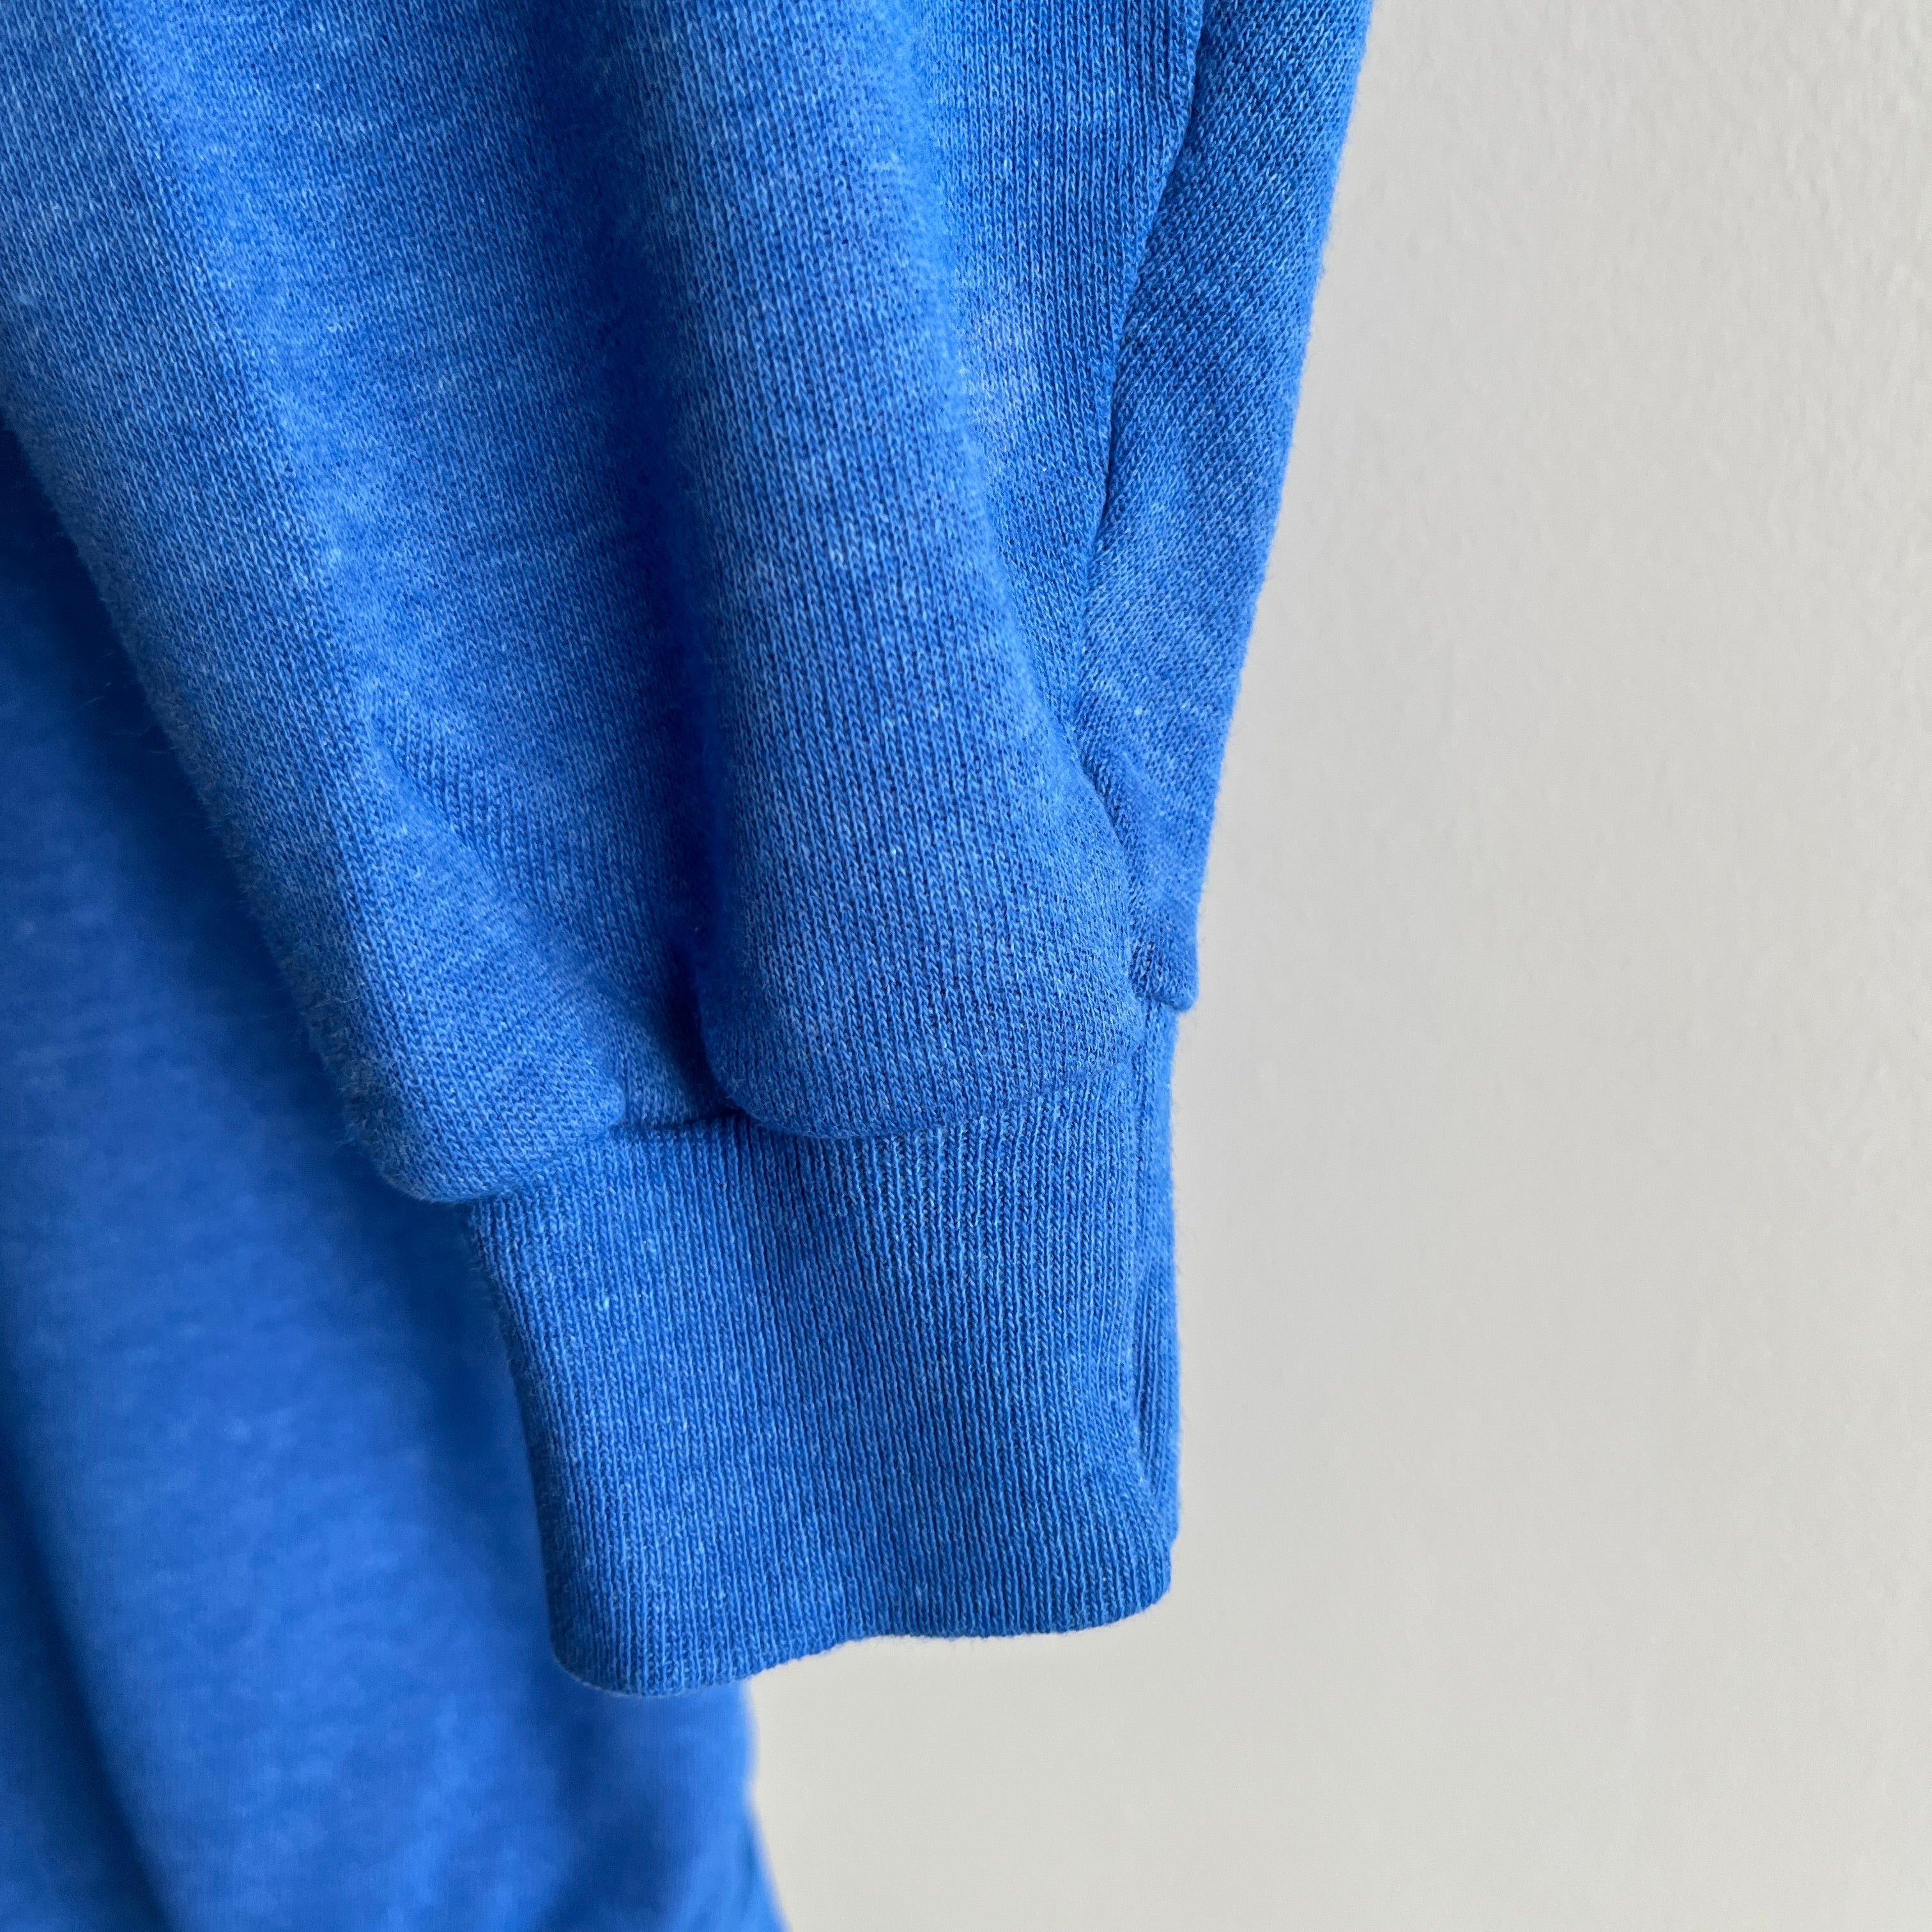 1980s Above Average Blue Jay Blue Raglan Sweatshirt